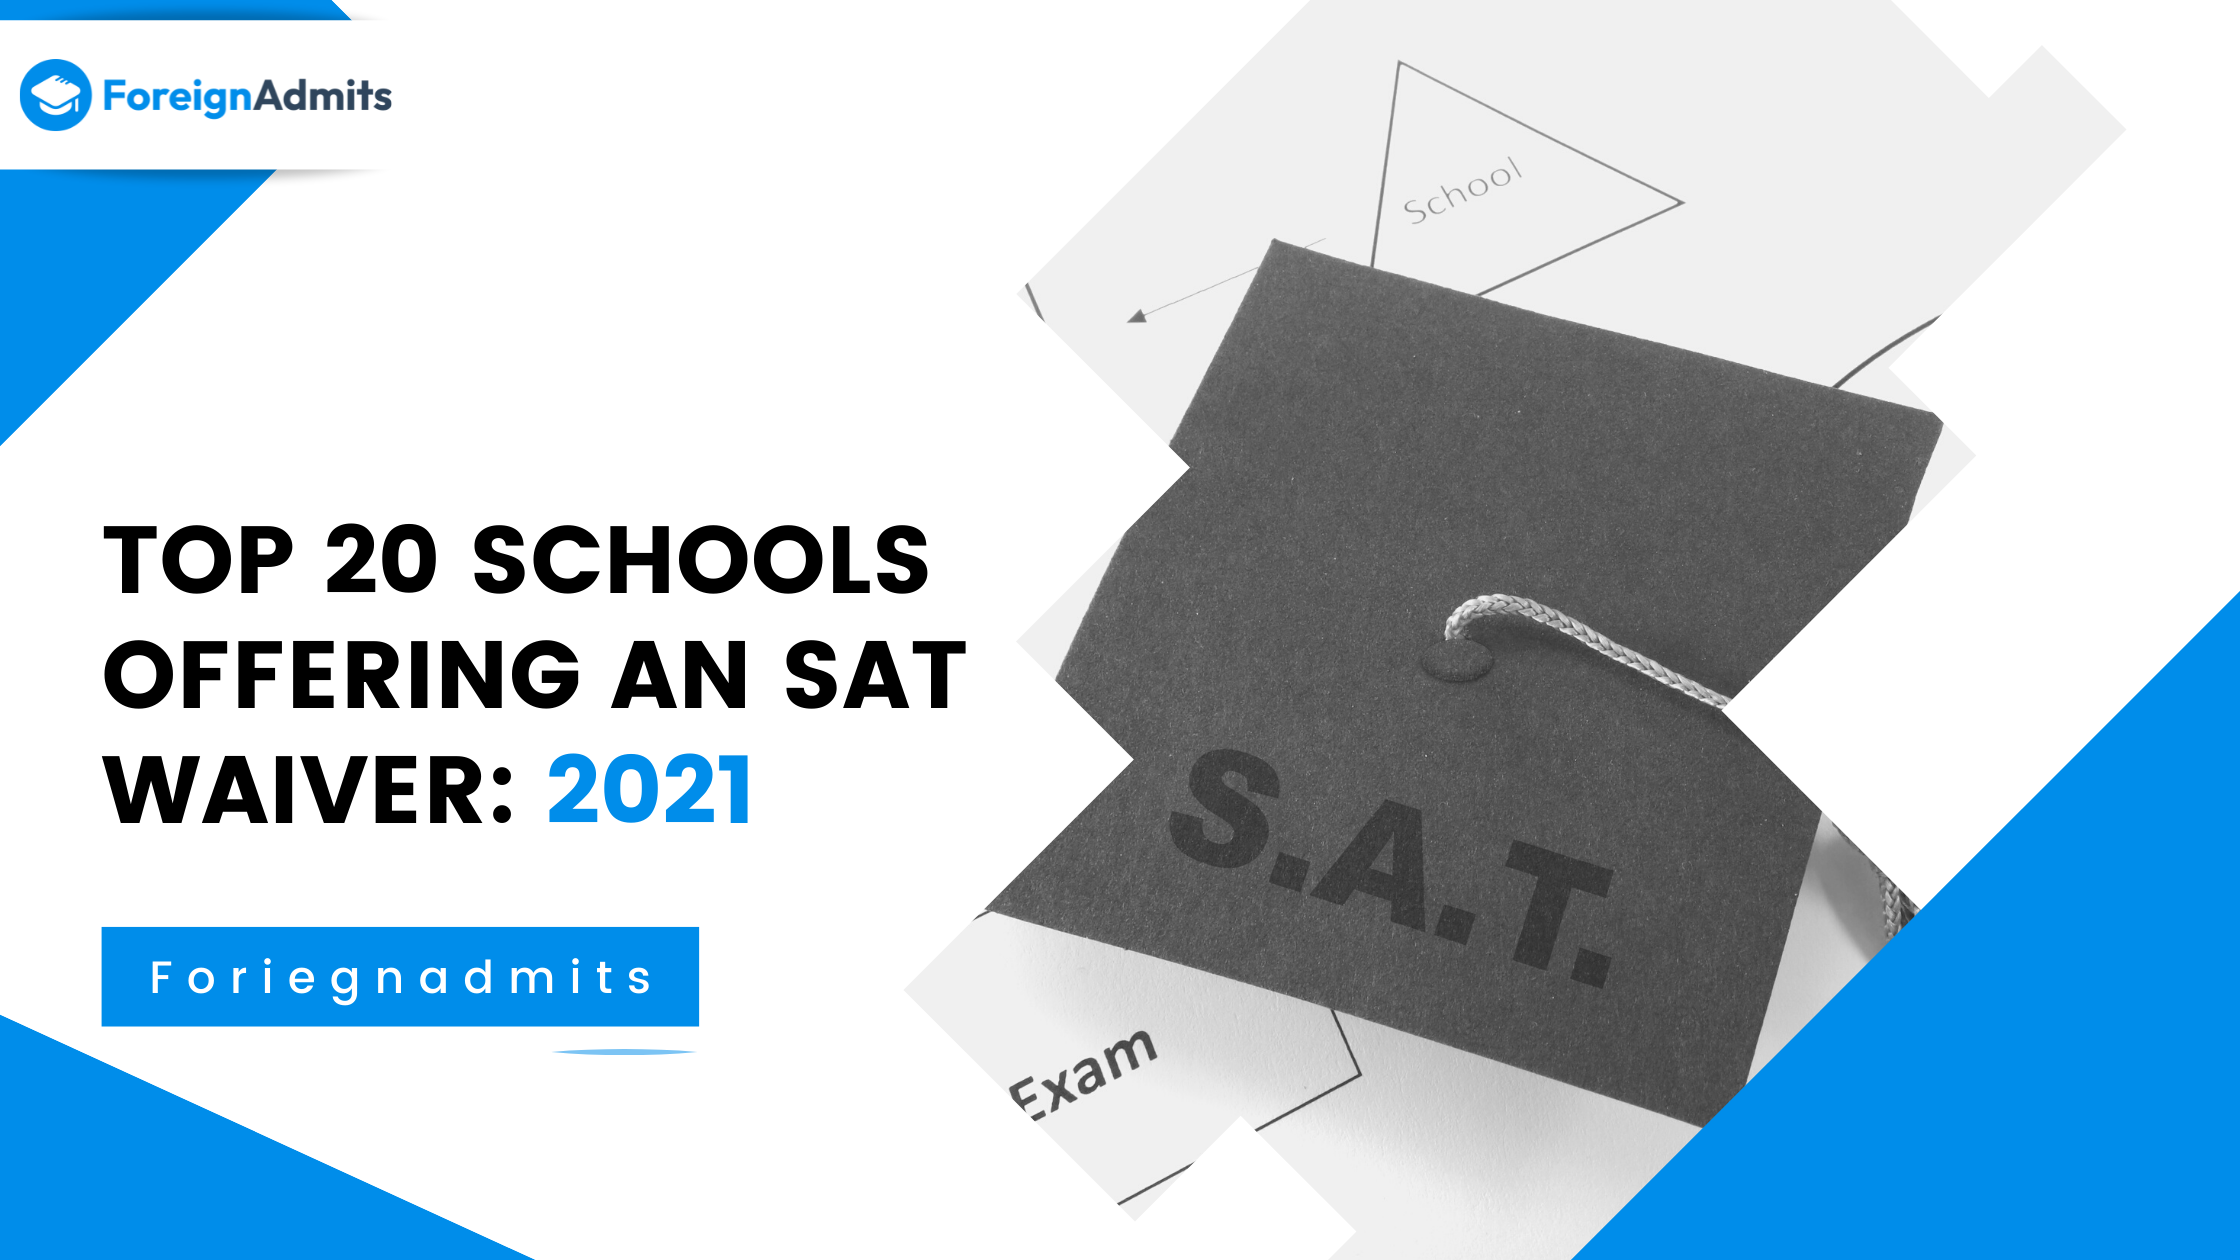 Top 20 Schools offering an SAT waiver: 2021